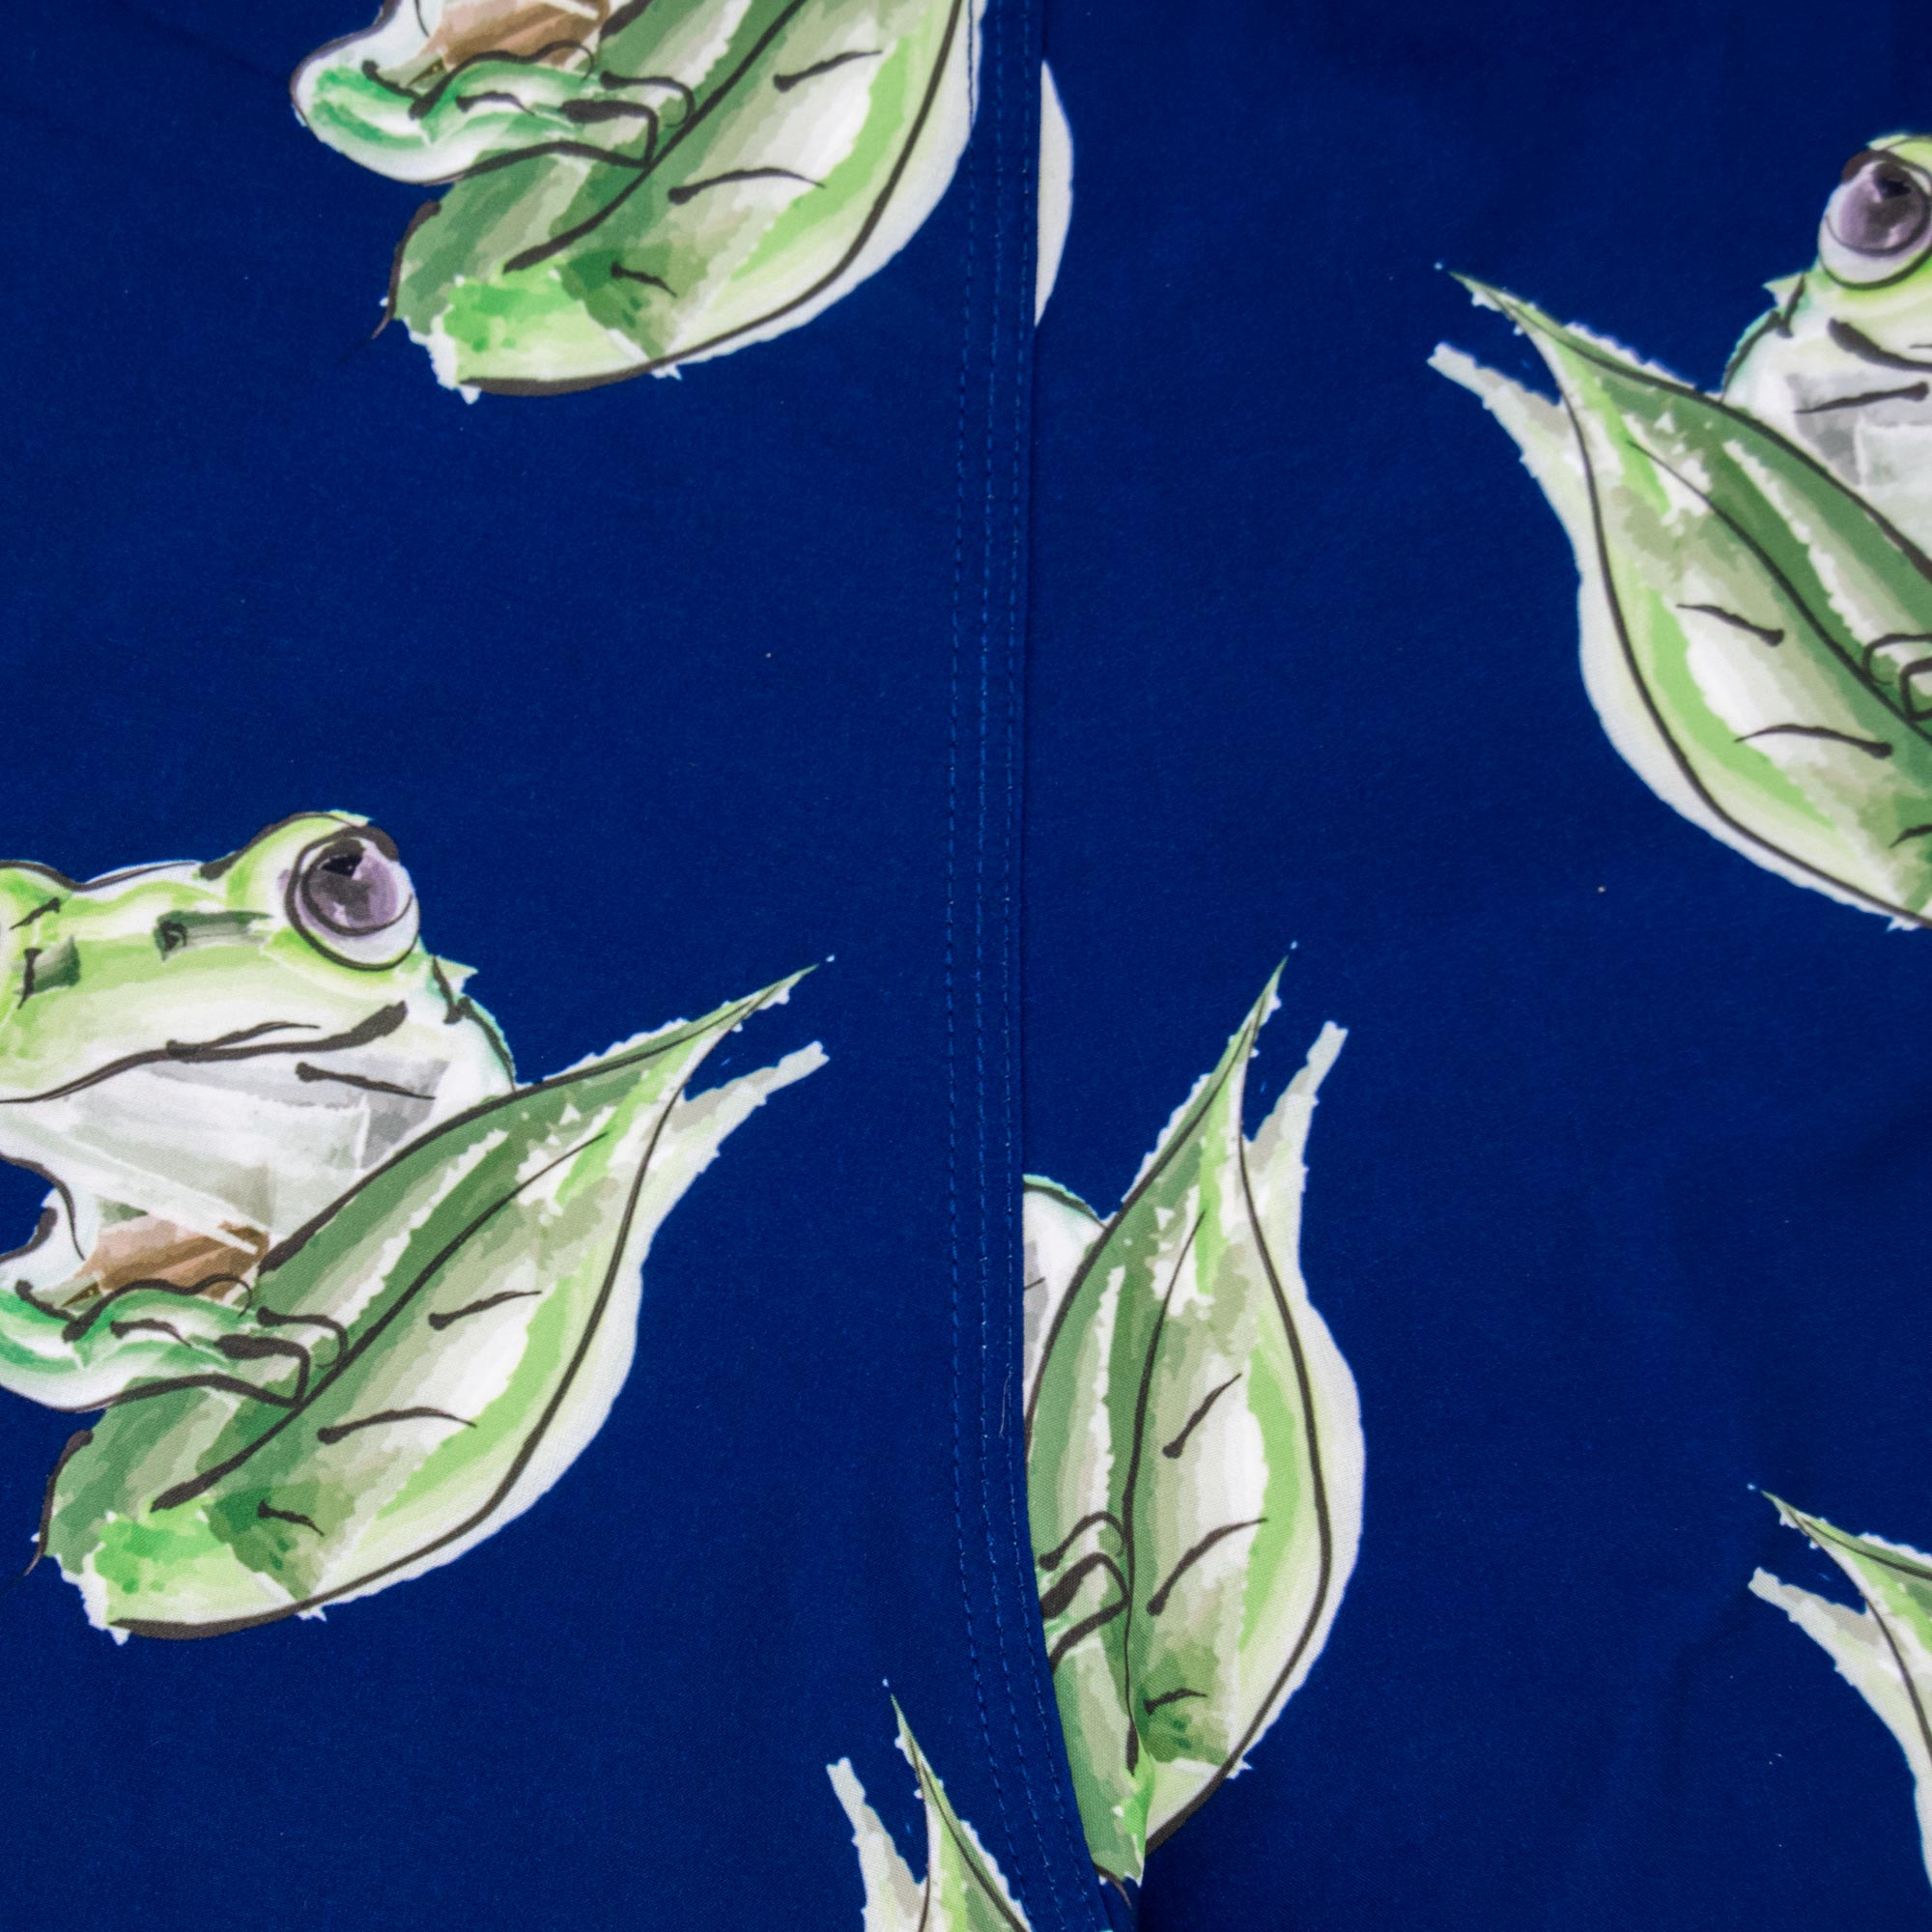 Frogs - Men's Swim Shorts